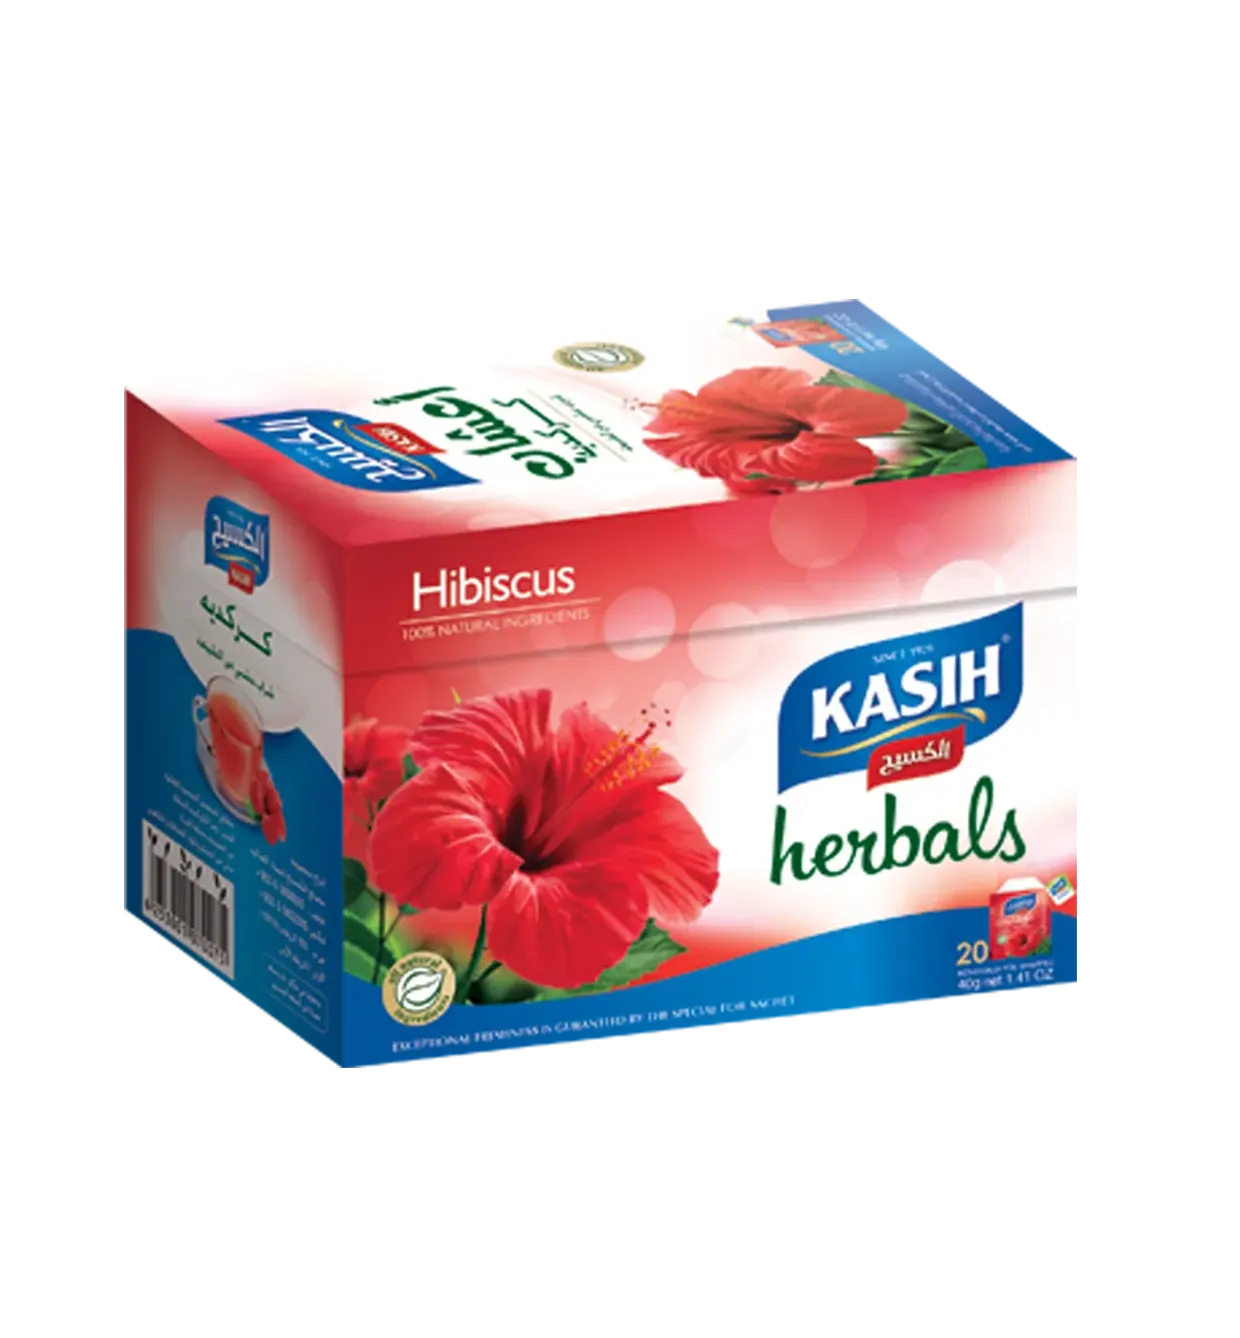 KASIH herbals  hibiscus 